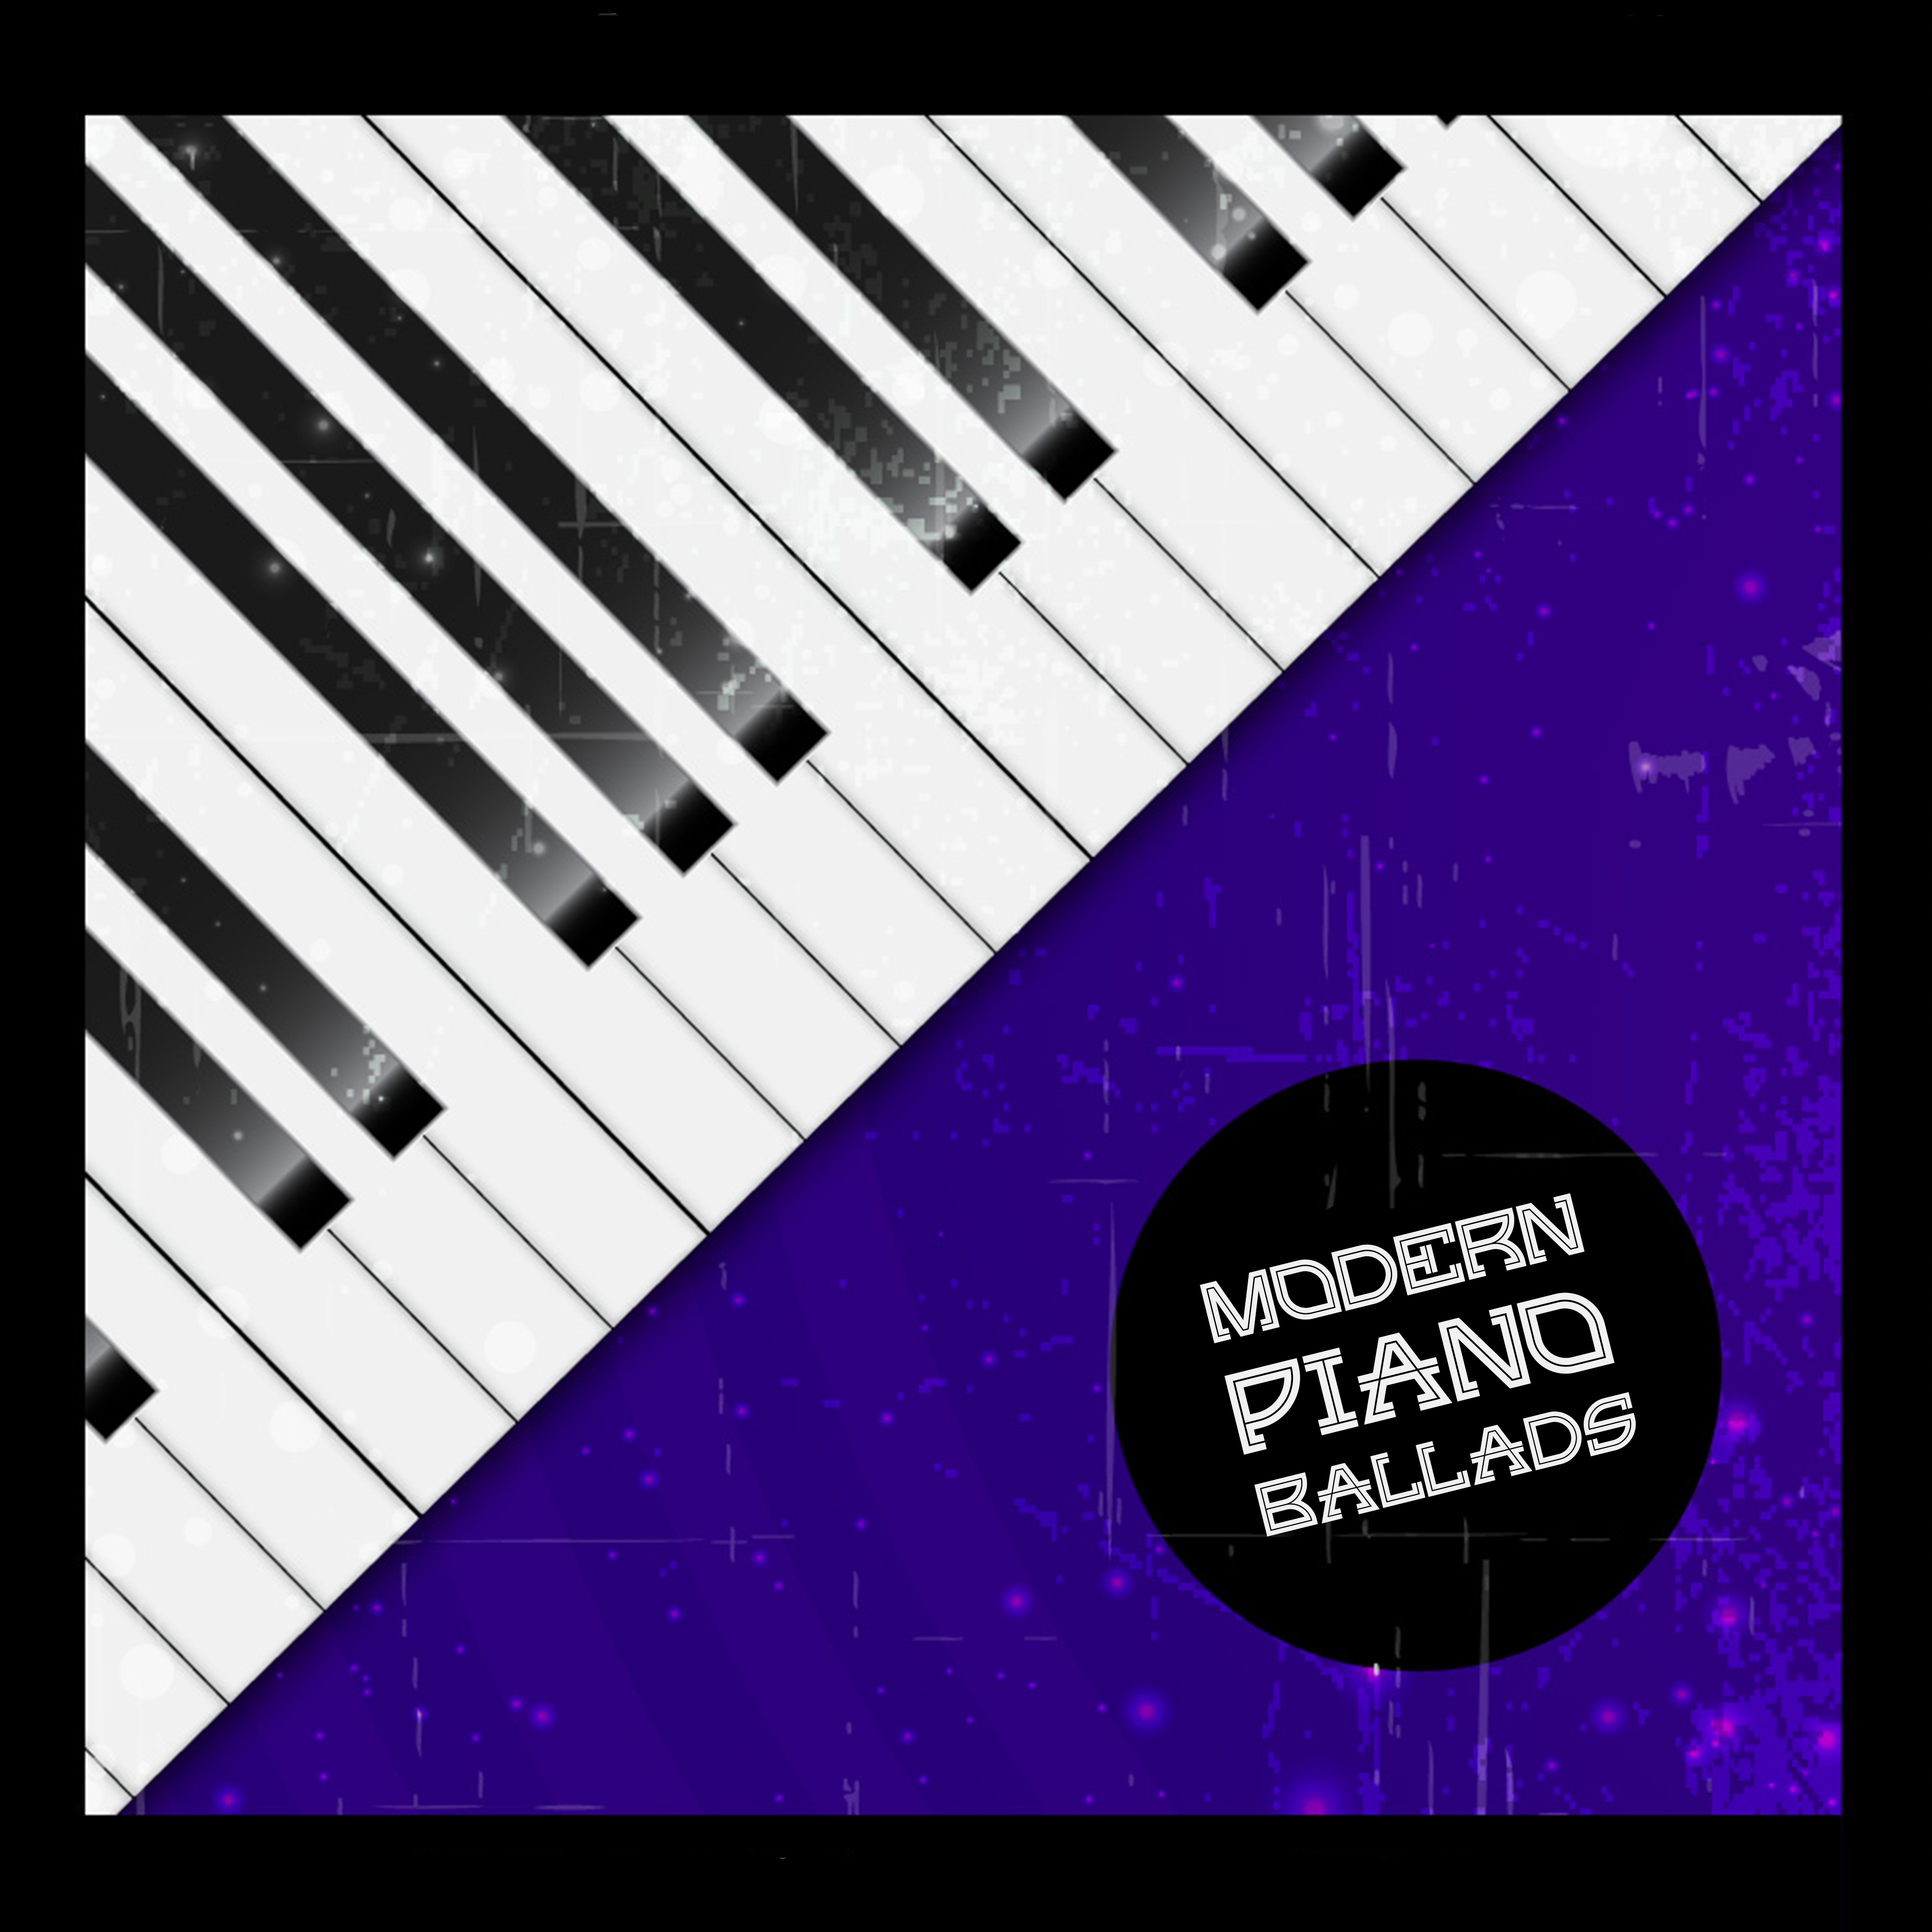 Modern Piano Ballads